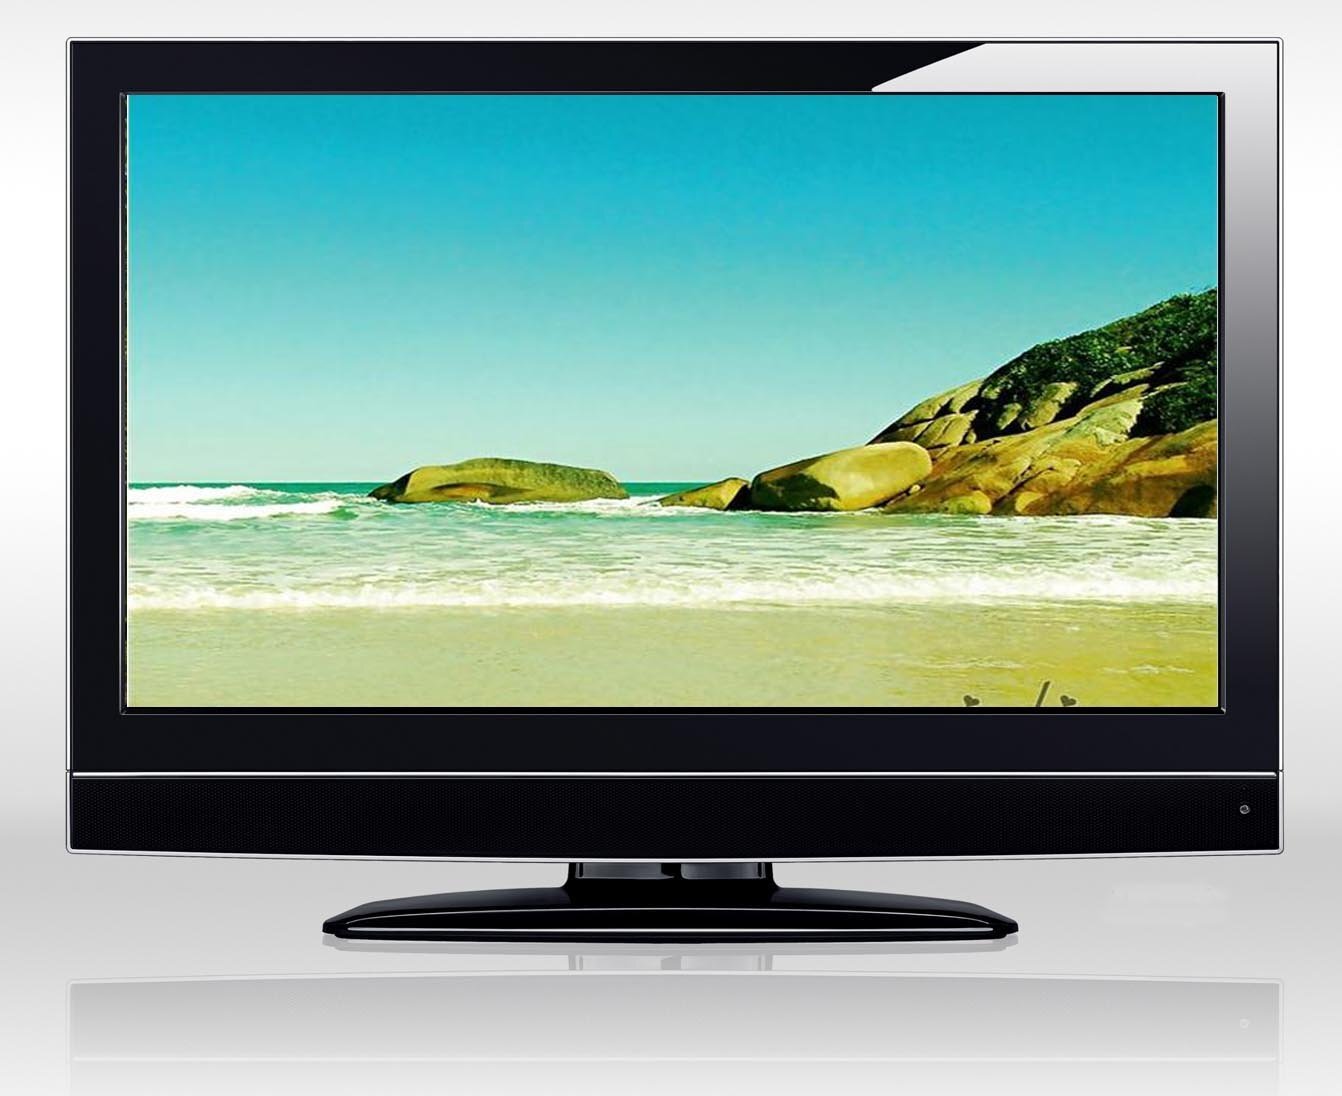 Телевизионный экран. LCD Color Television TV-970. Телевизор плоский экран. Телевизор высокой четкости. Изображение на экране телевизора.